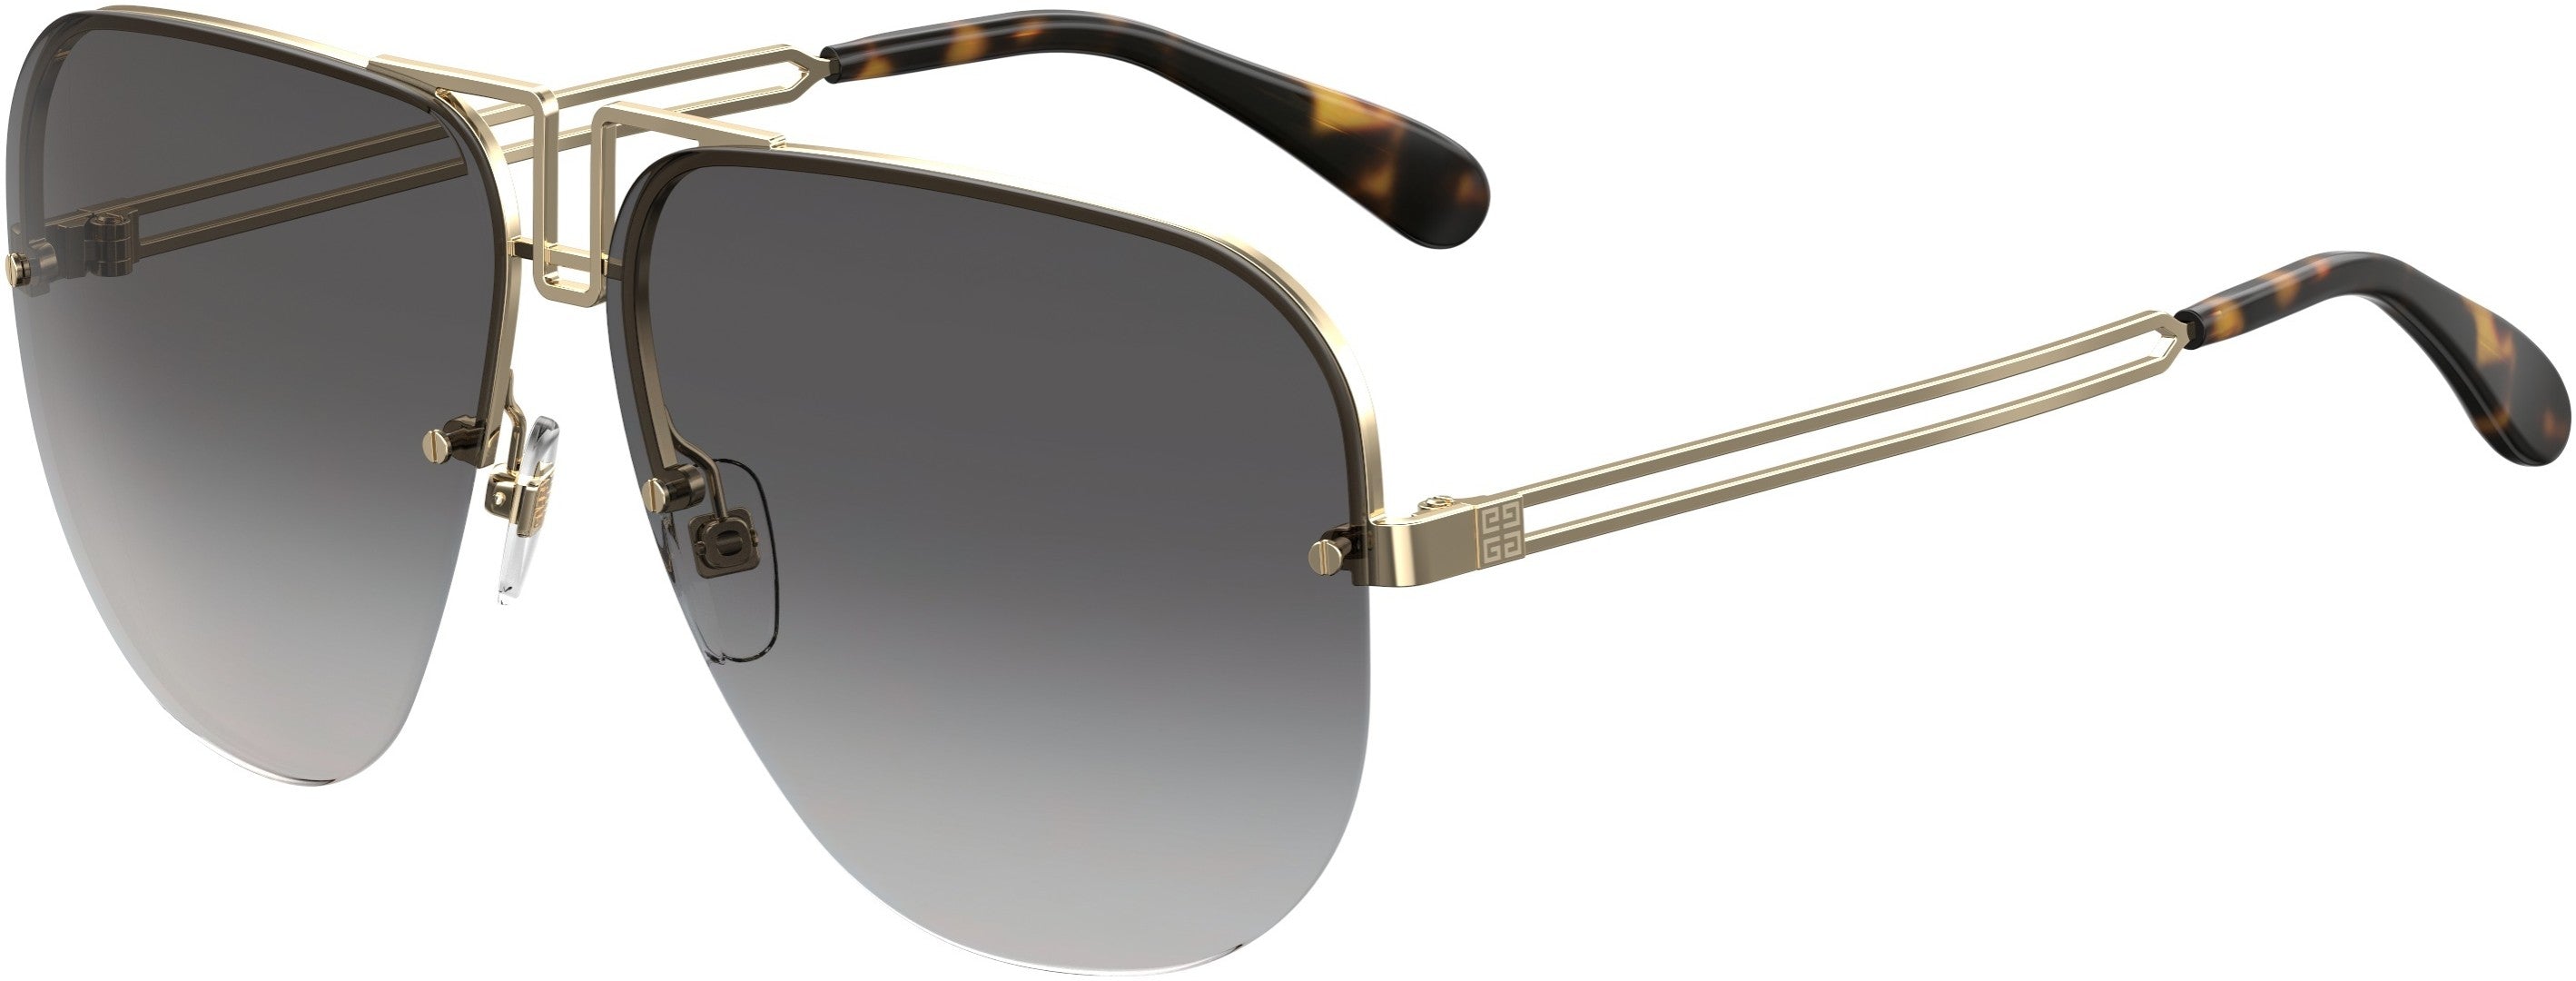  Givenchy 7126/S Aviator Sunglasses 0J5G-0J5G  Gold (9O Dark Gray Gradient)